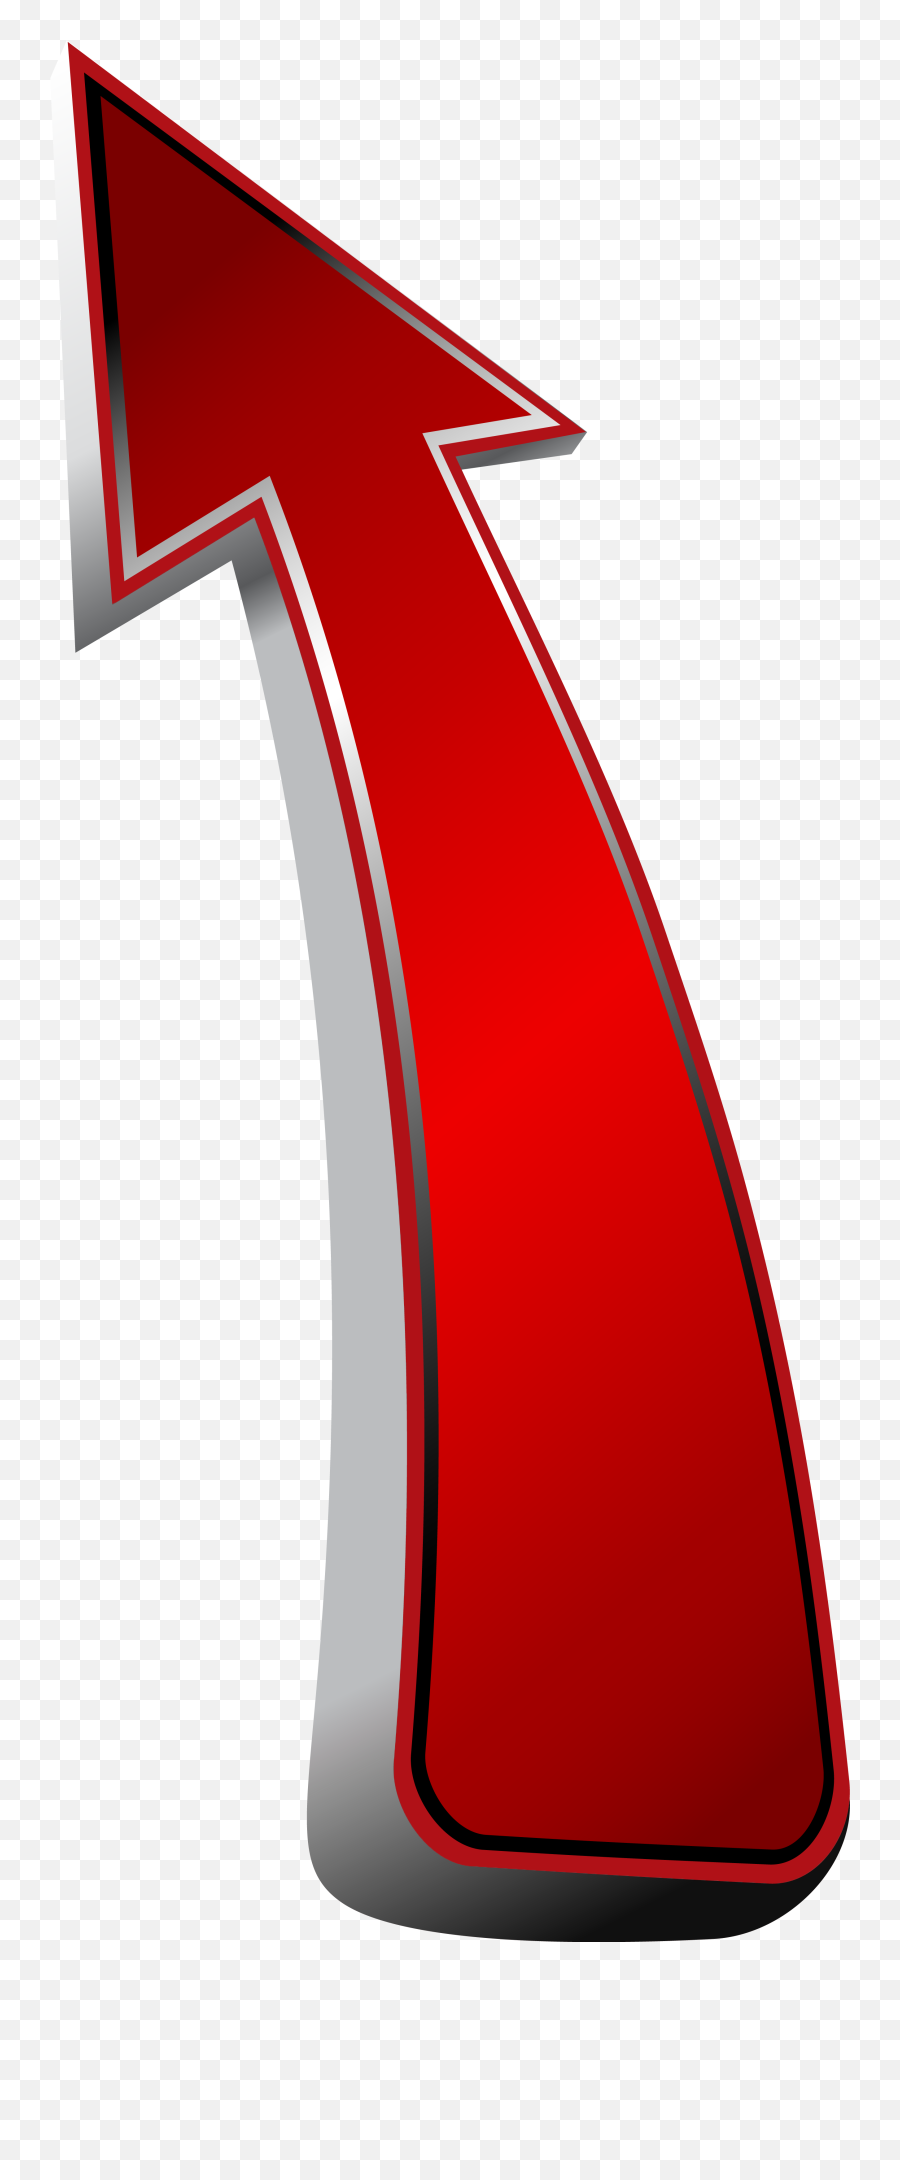 Red Up Arrow Transparent Png Clip Art - Transparent Background Red Up Arrow,Red Transparent Arrow